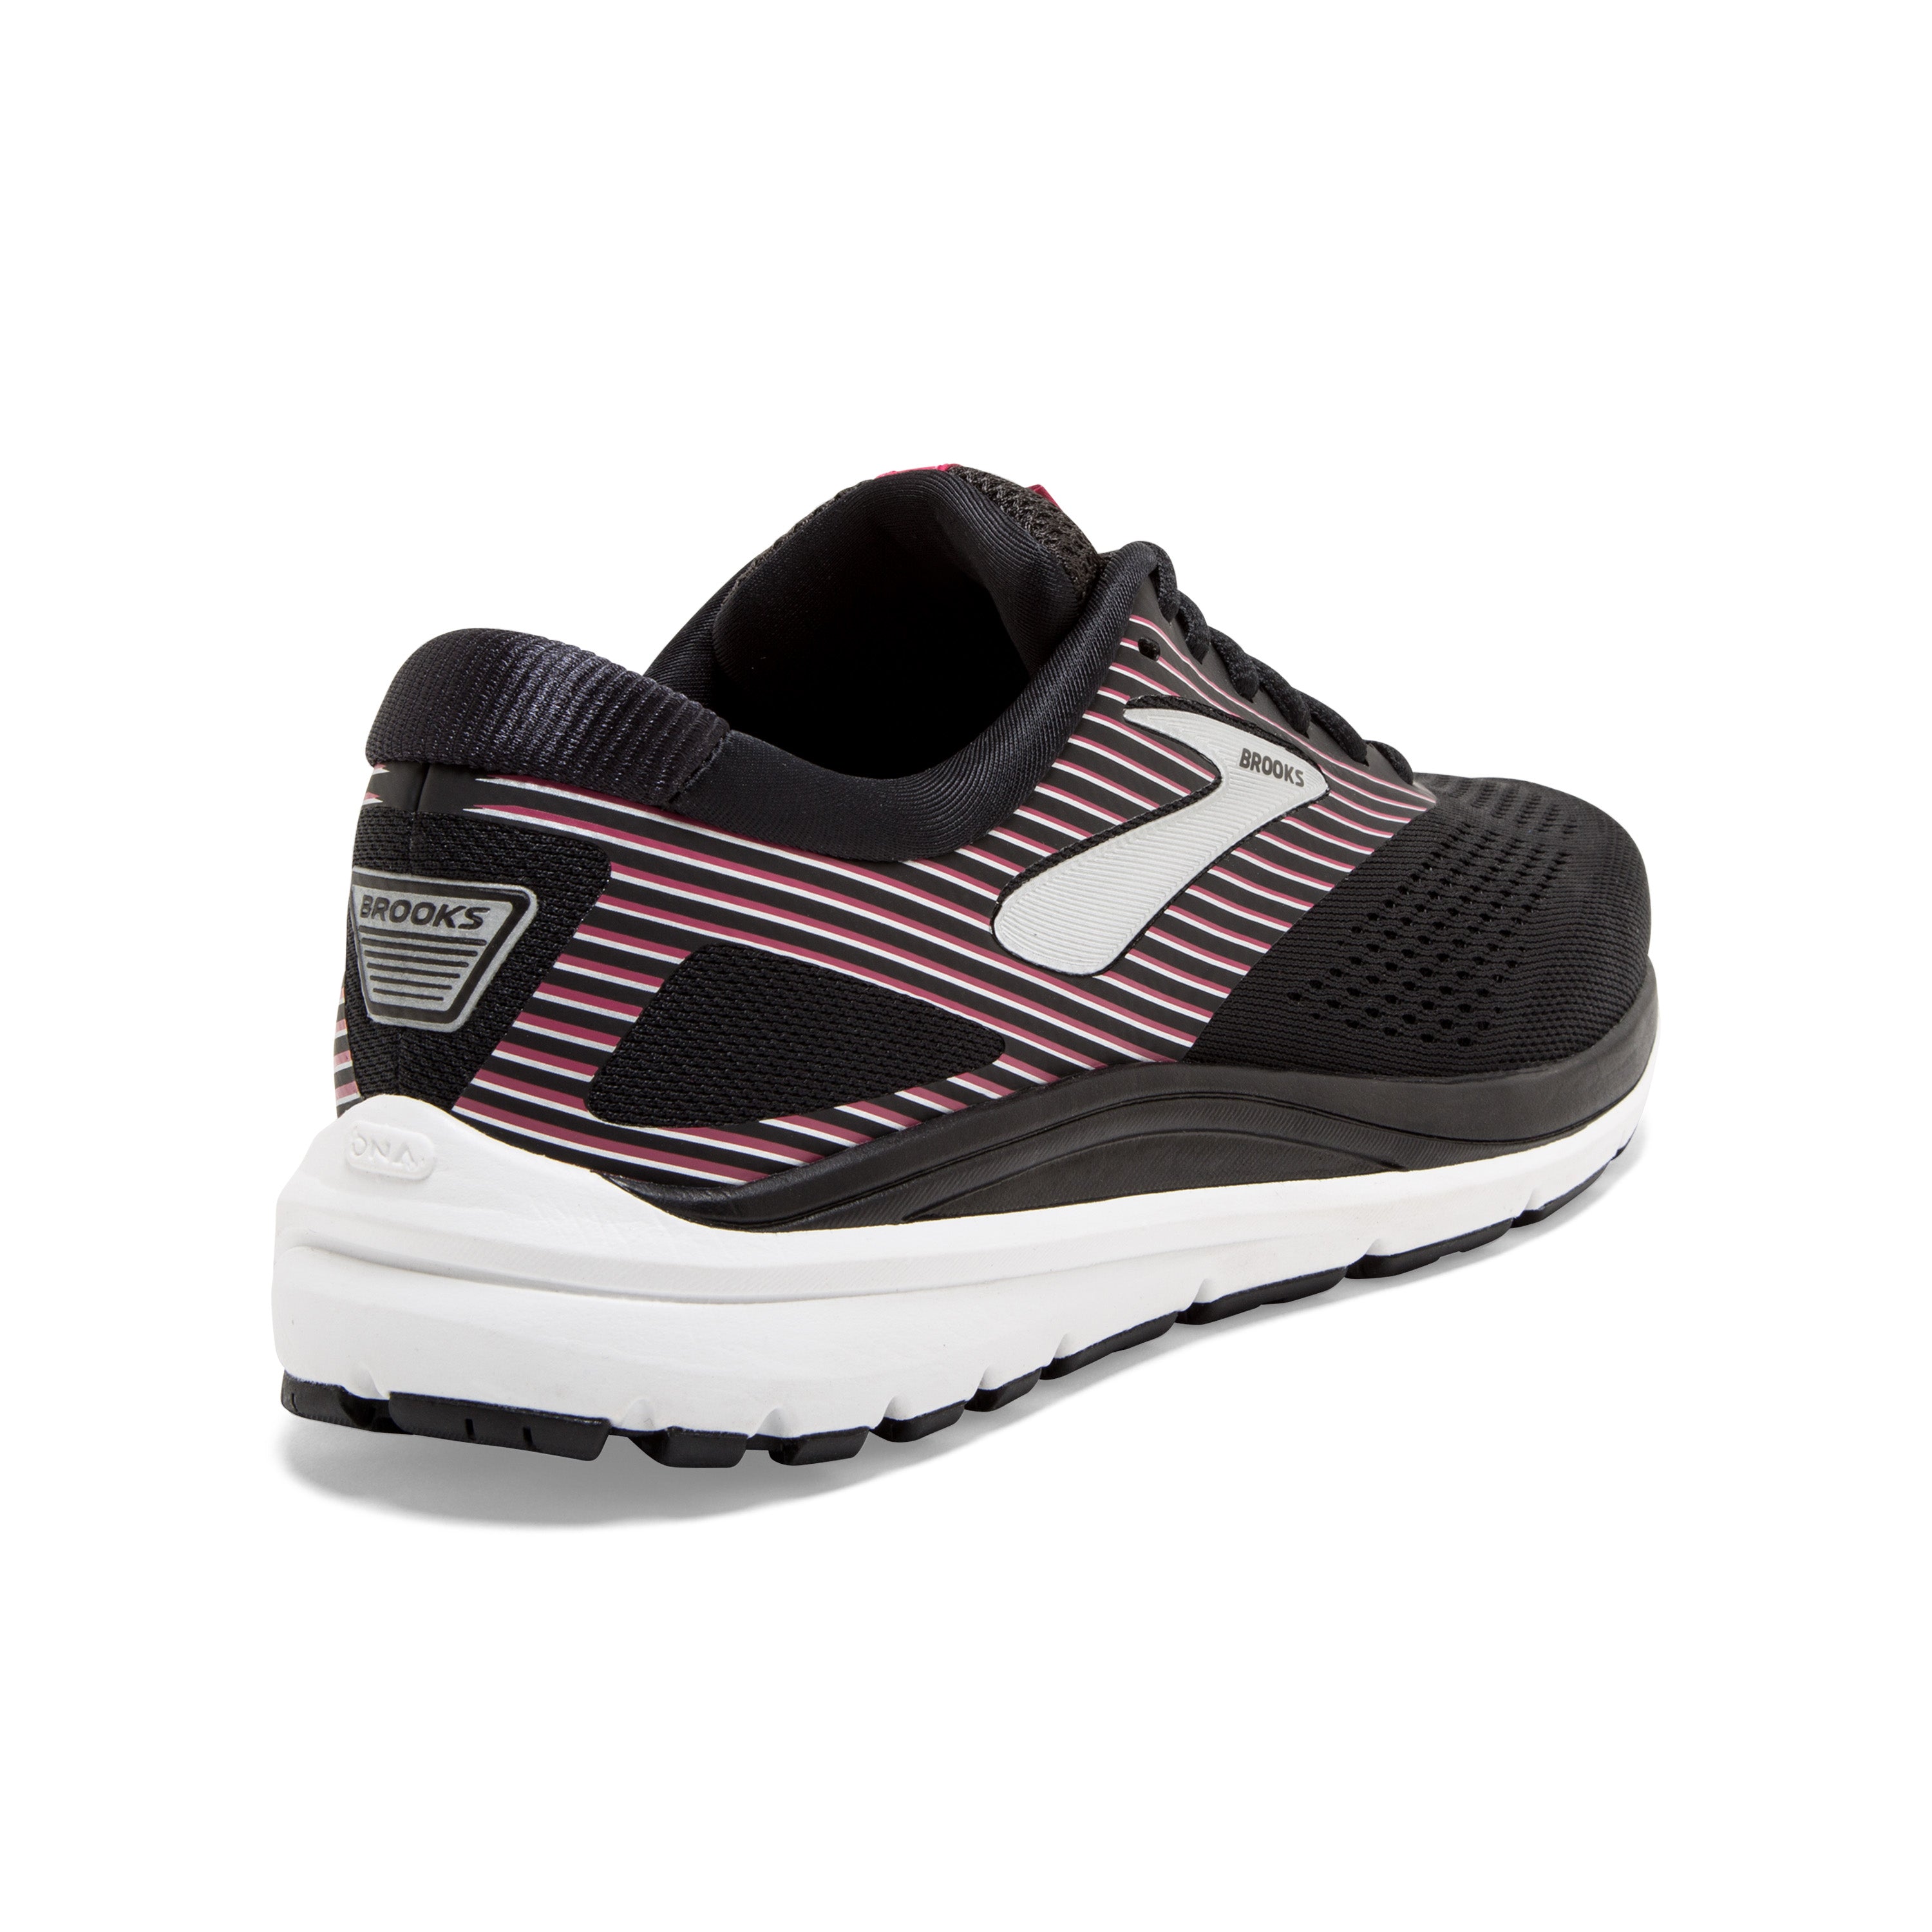 Women's Addiction 14 Running Shoe - Black/Hot Pink/Silver - Narrow ...